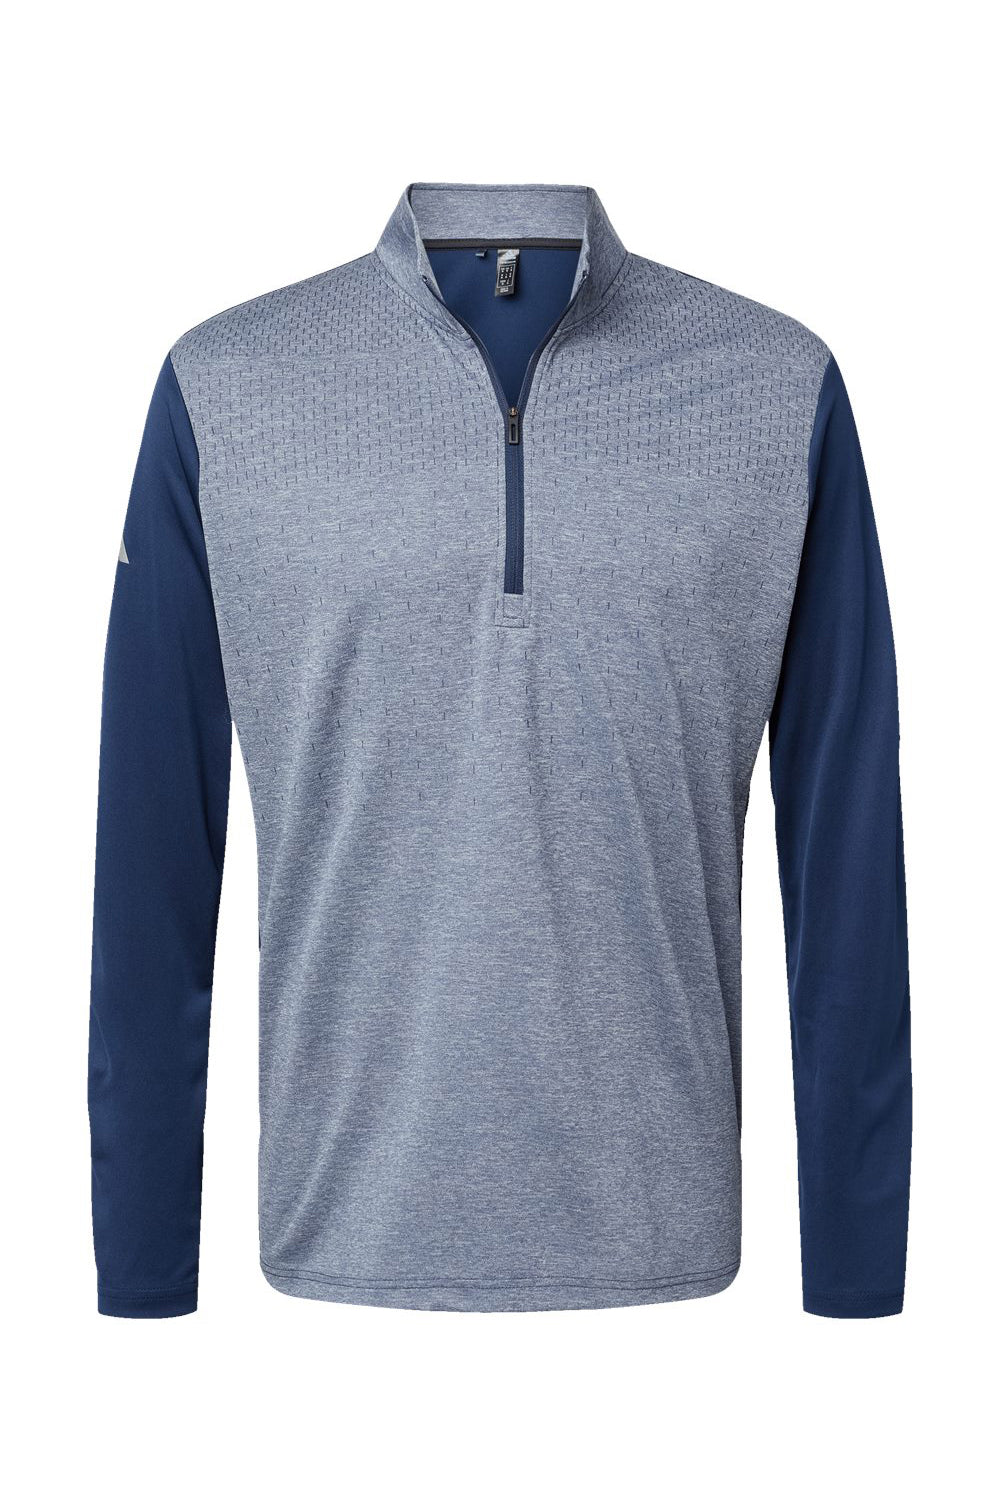 Adidas A522 Mens Heather Block Print Moisture Wicking 1/4 Zip Sweatshirt Collegiate Navy Blue Melange/Navy Blue/Grey Flat Front